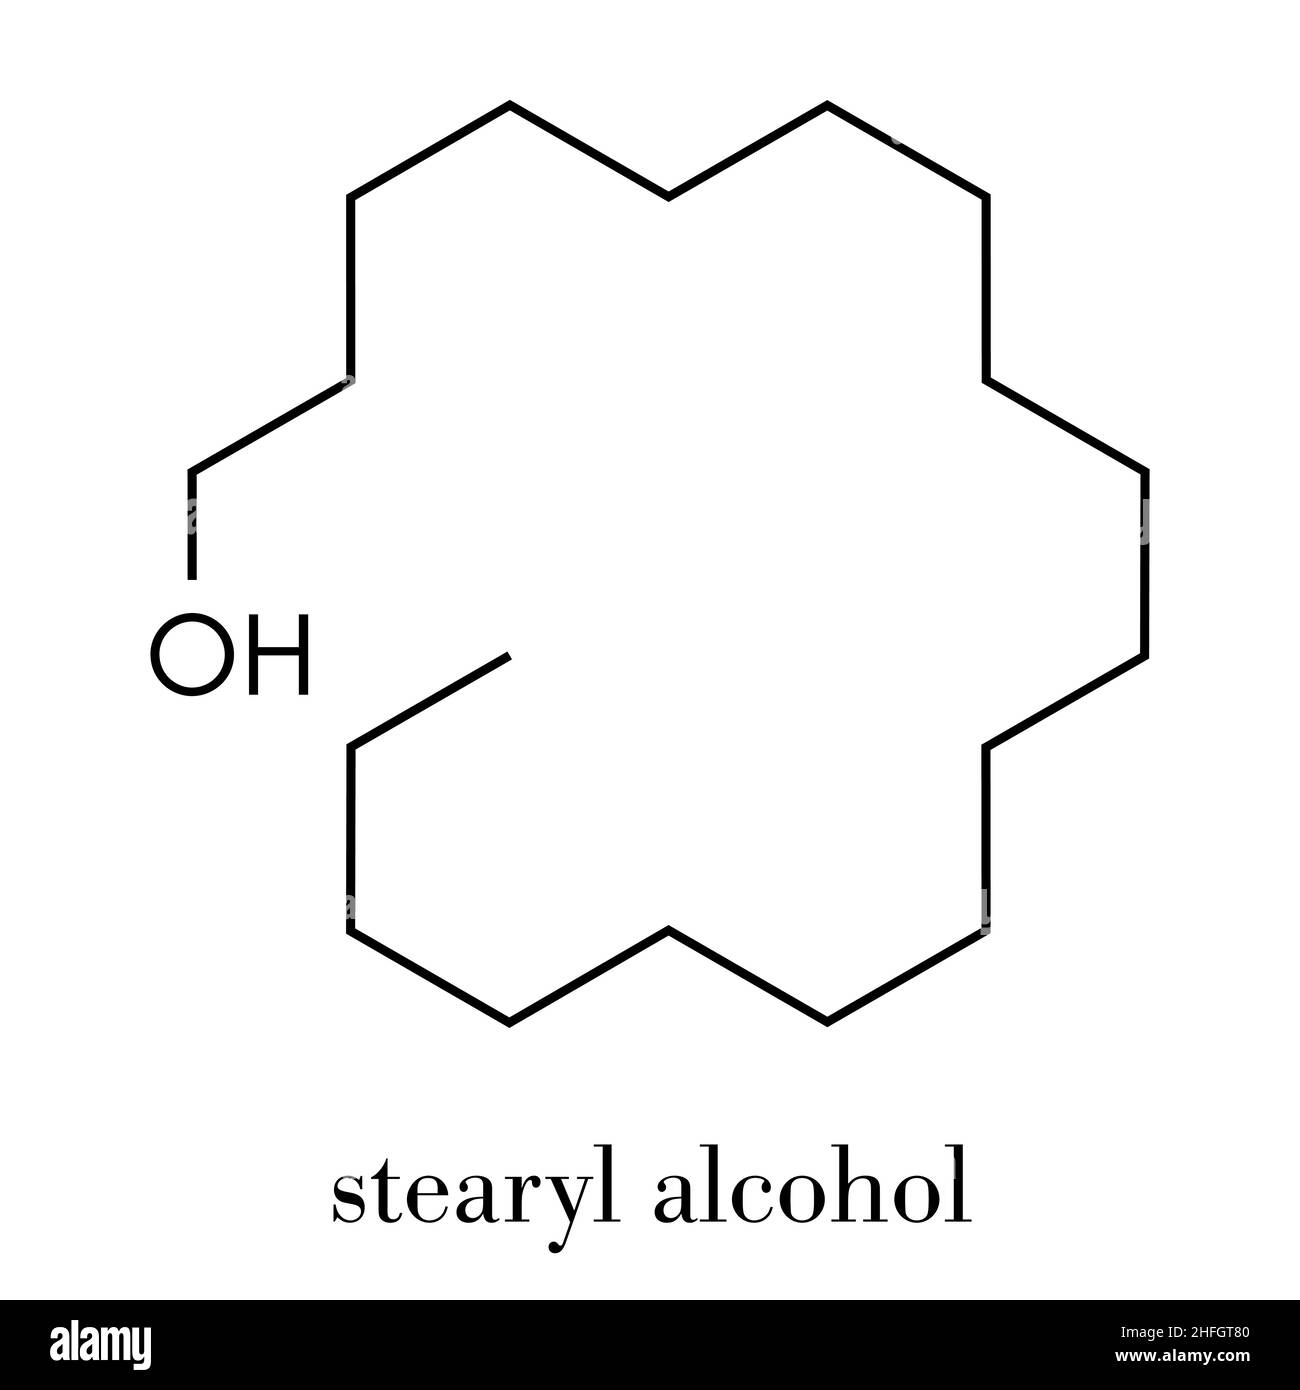 Cetearyl Alcohol